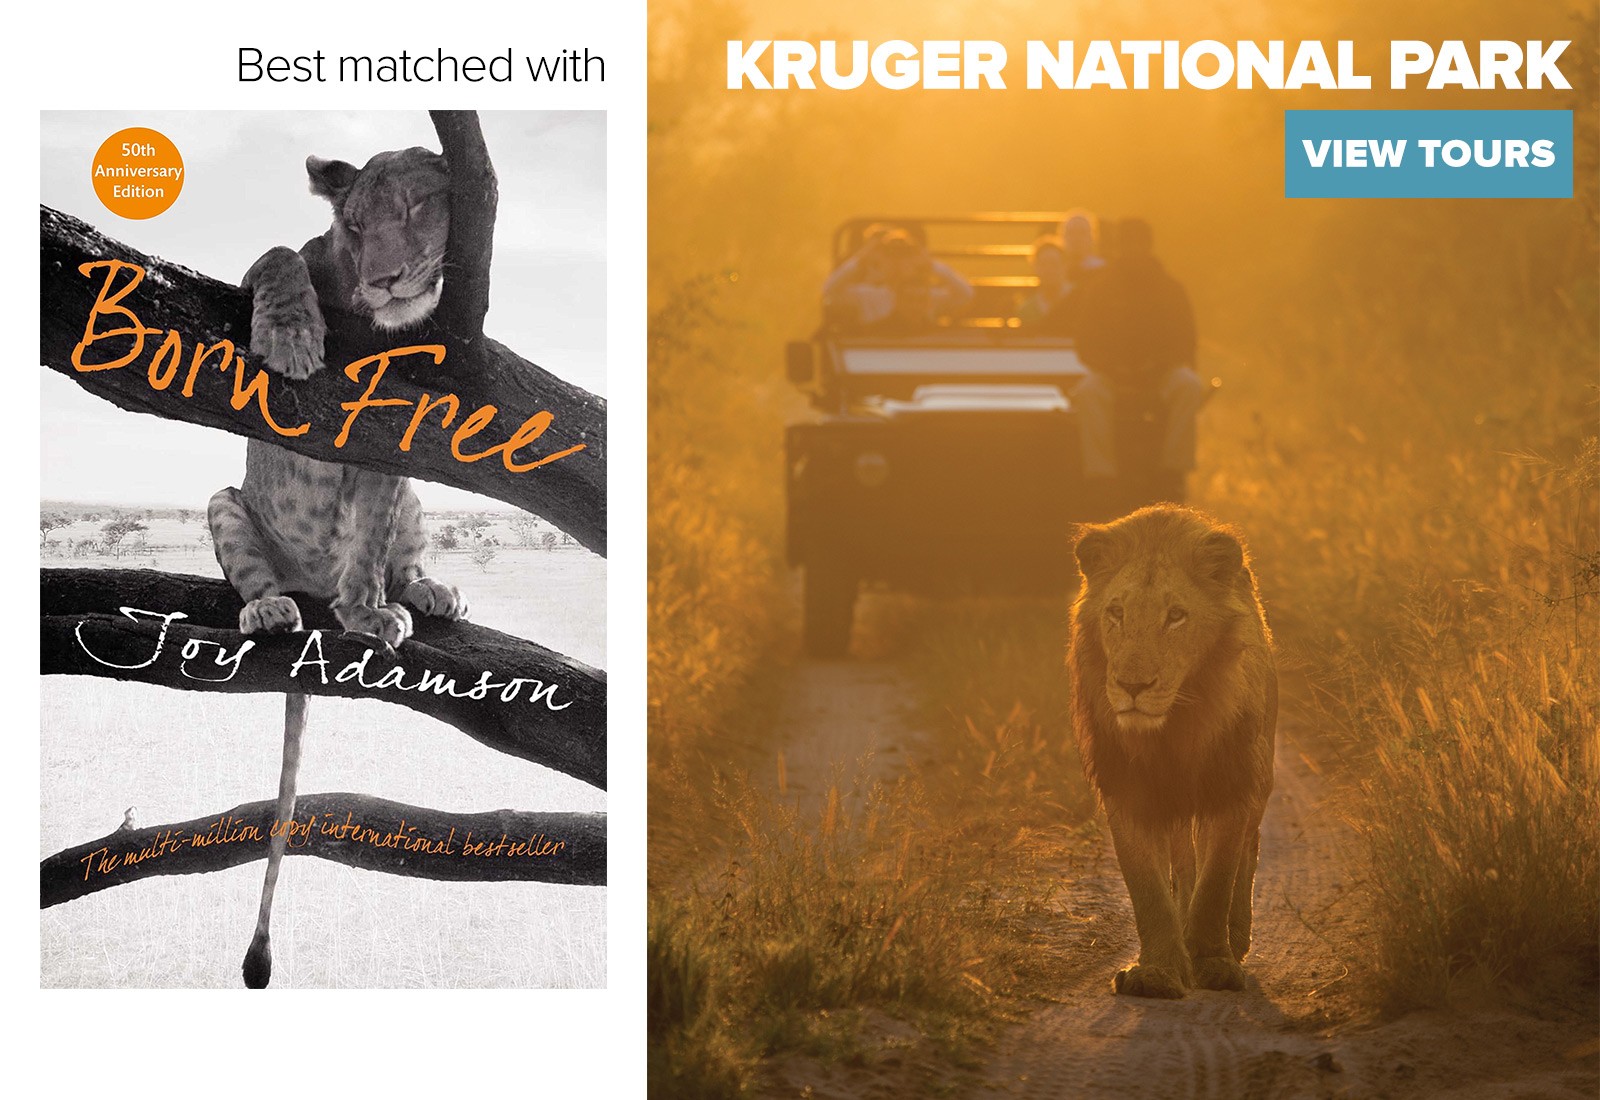 born free book recommended for kruger national park